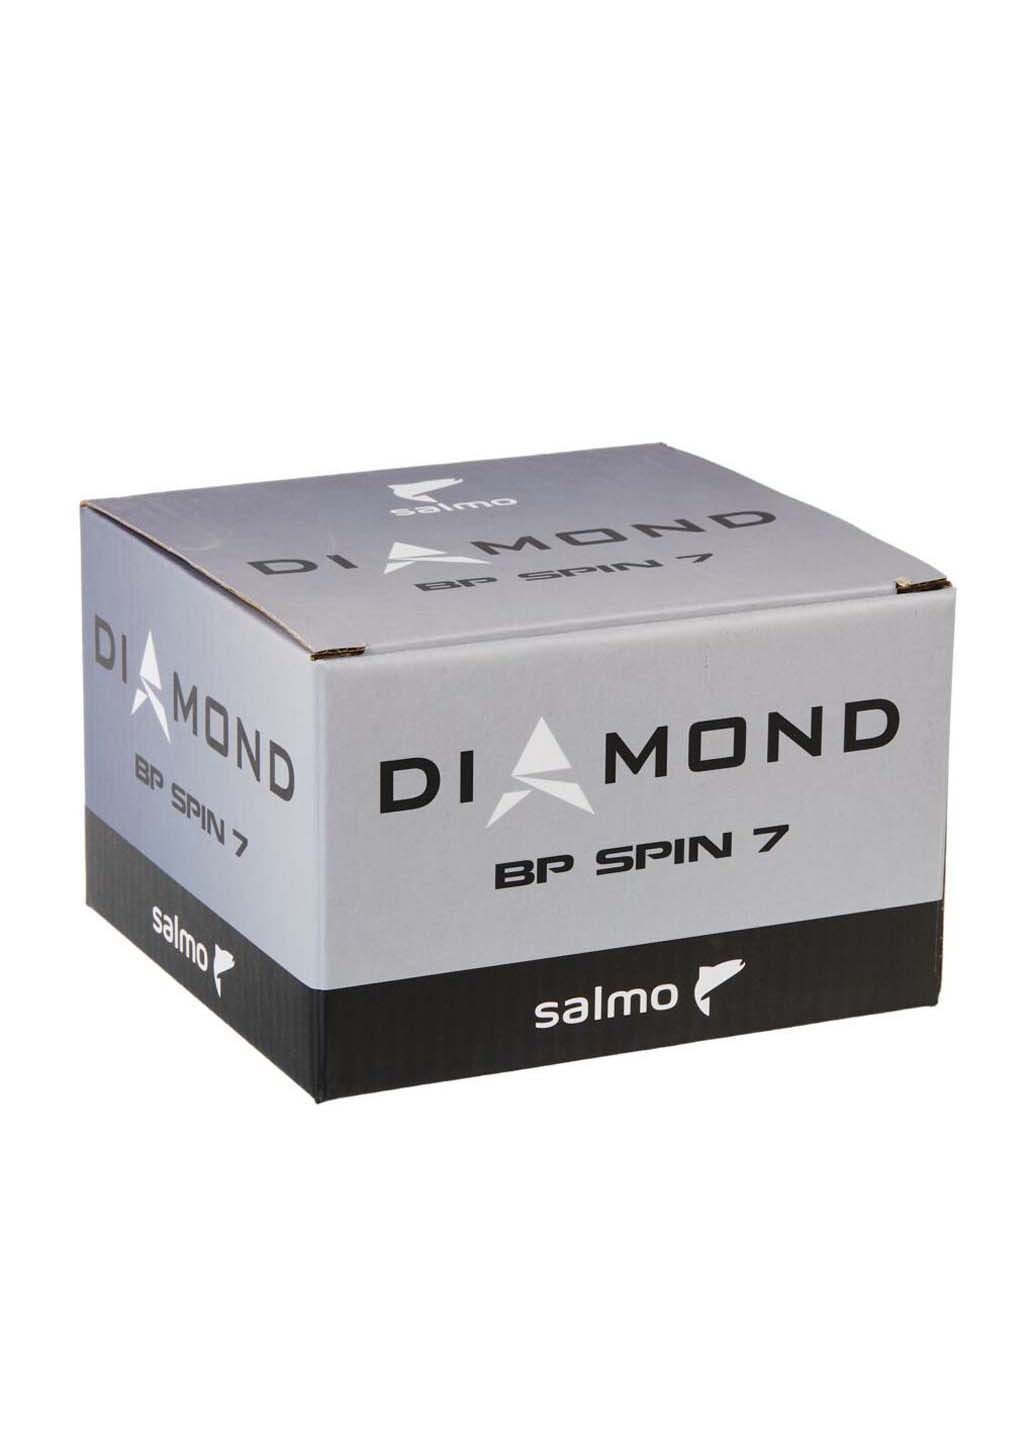 Катушка безынерционная Salmo diamond bp spin 7 (239264207)